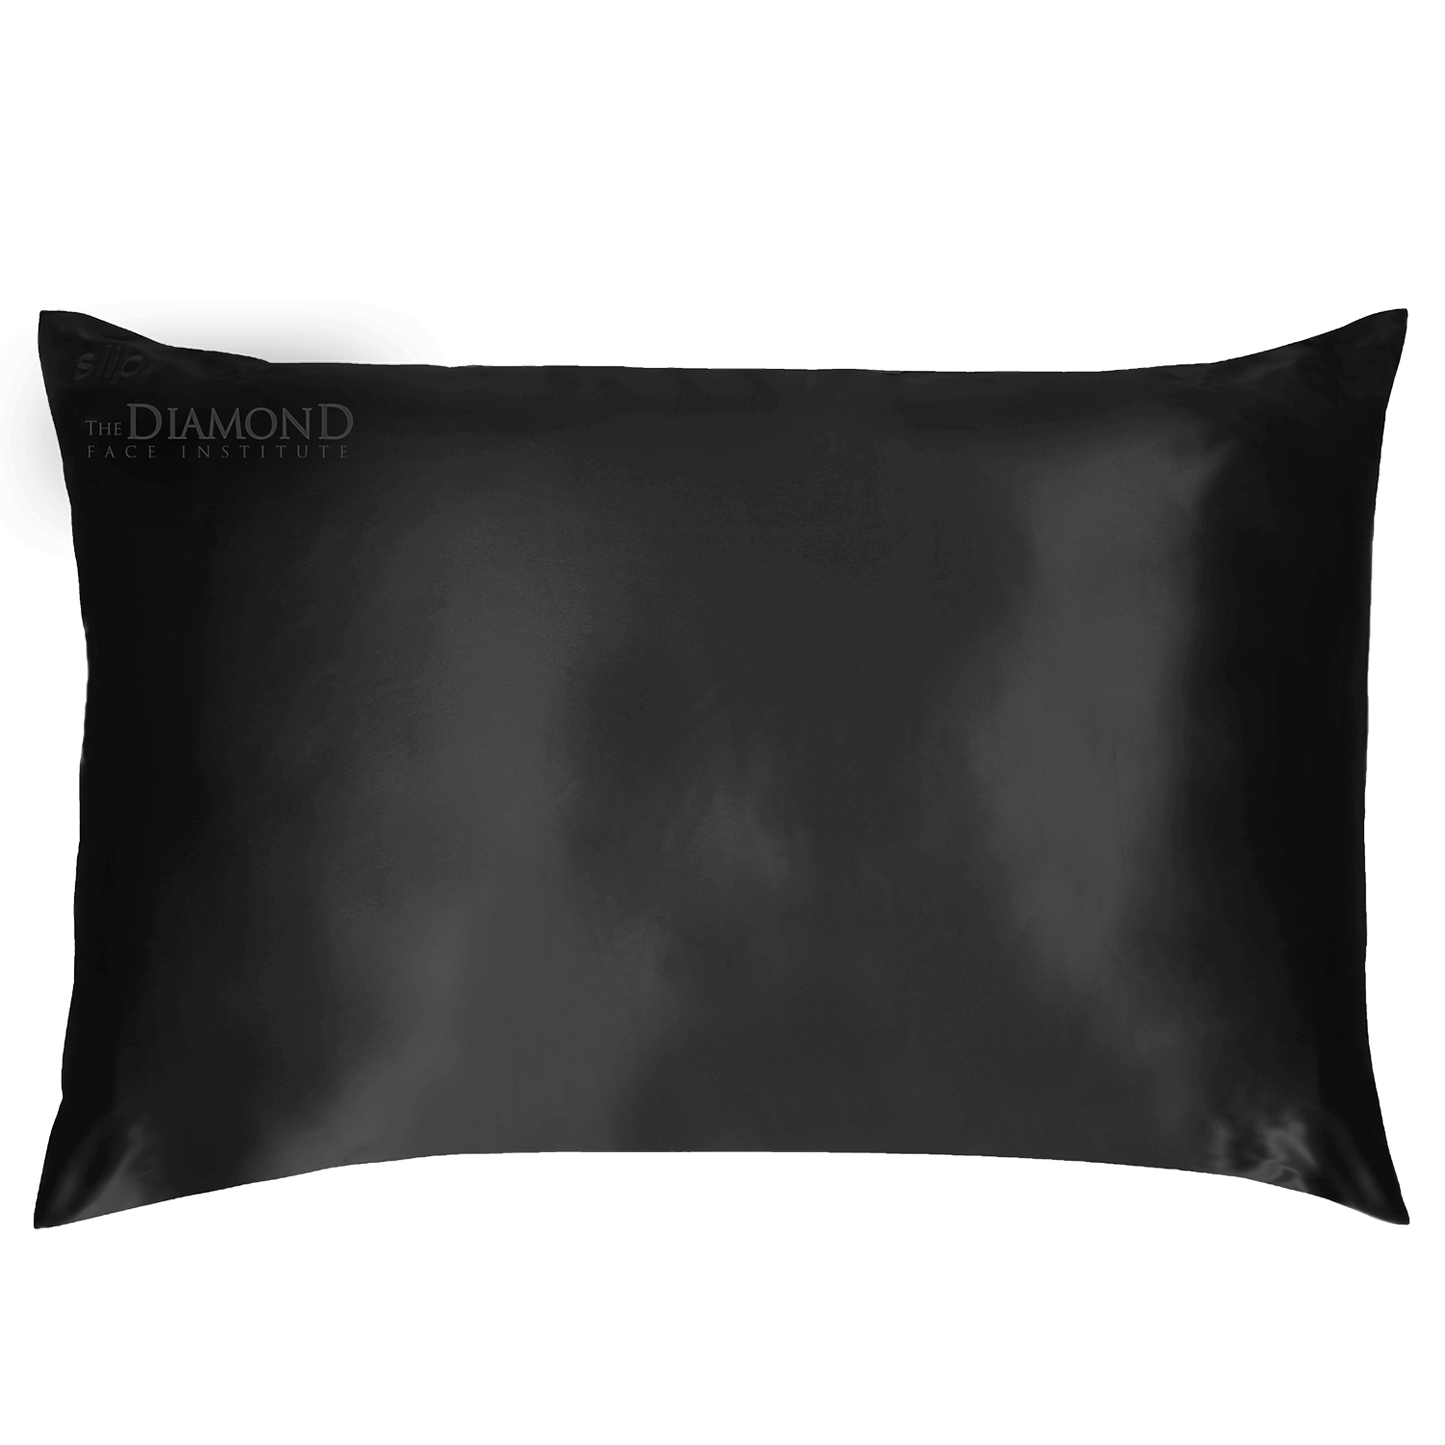 Monogrammed Pillowcase in black